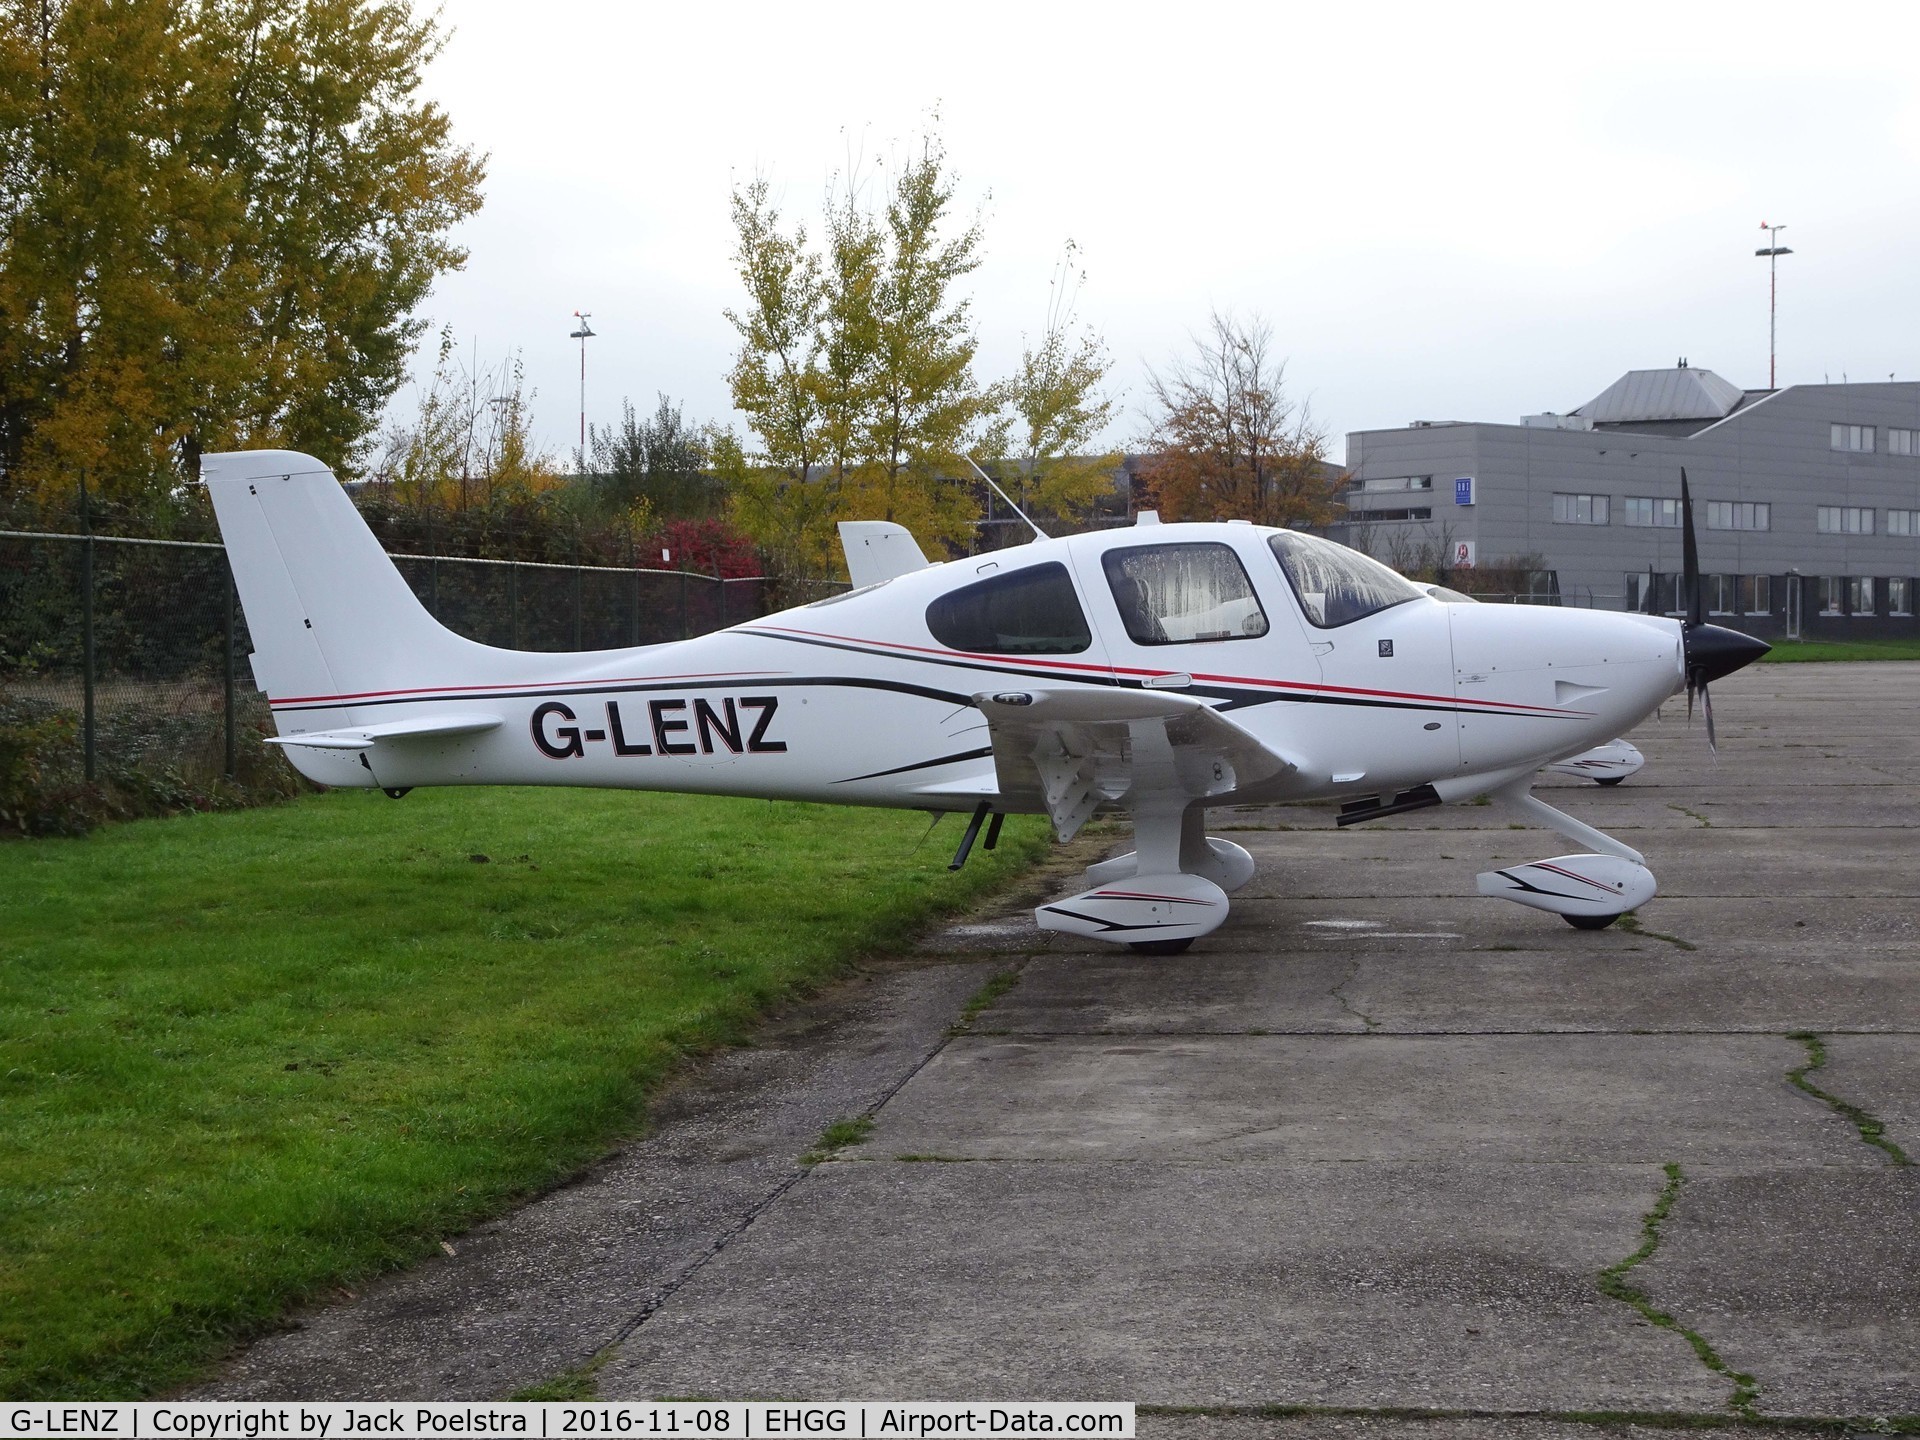 G-LENZ, 2016 Cirrus SR20 C/N 2304, G-LENZ at ramp of General Enterprise at Groningen airport